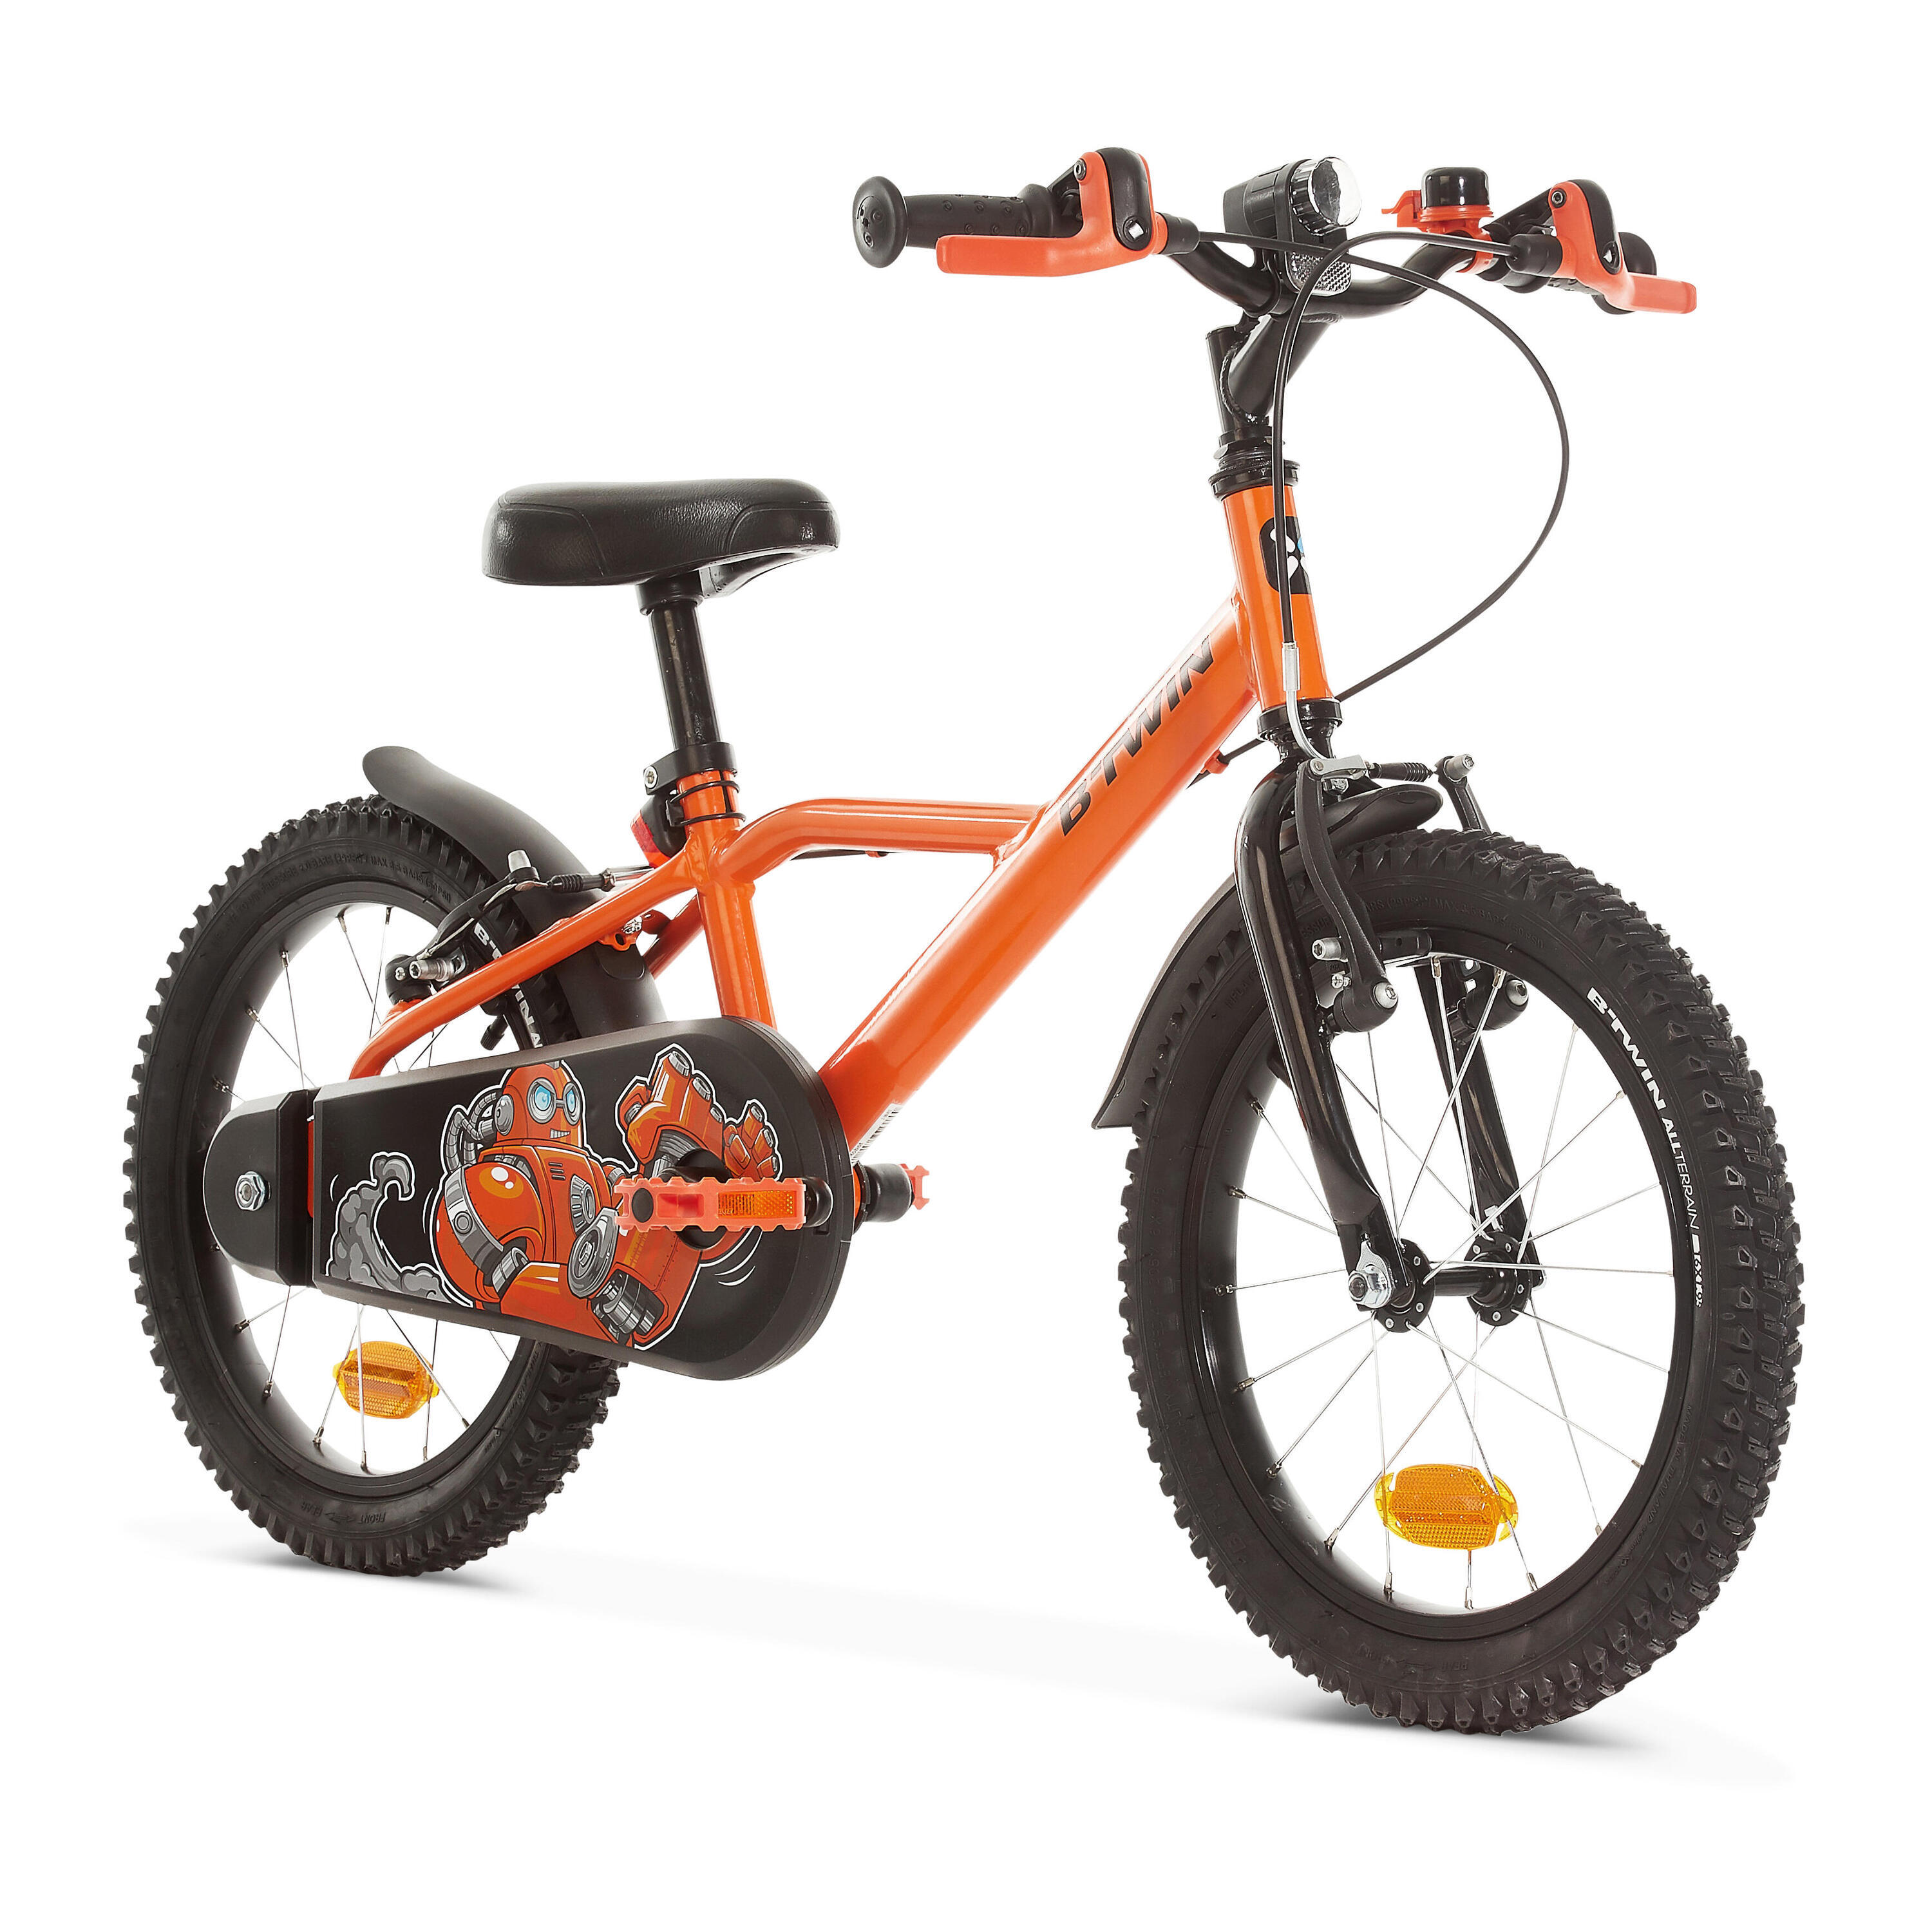 Refurbished Kids 16-inch chain guard easy-braking bike - Orange - C Grade 2/7